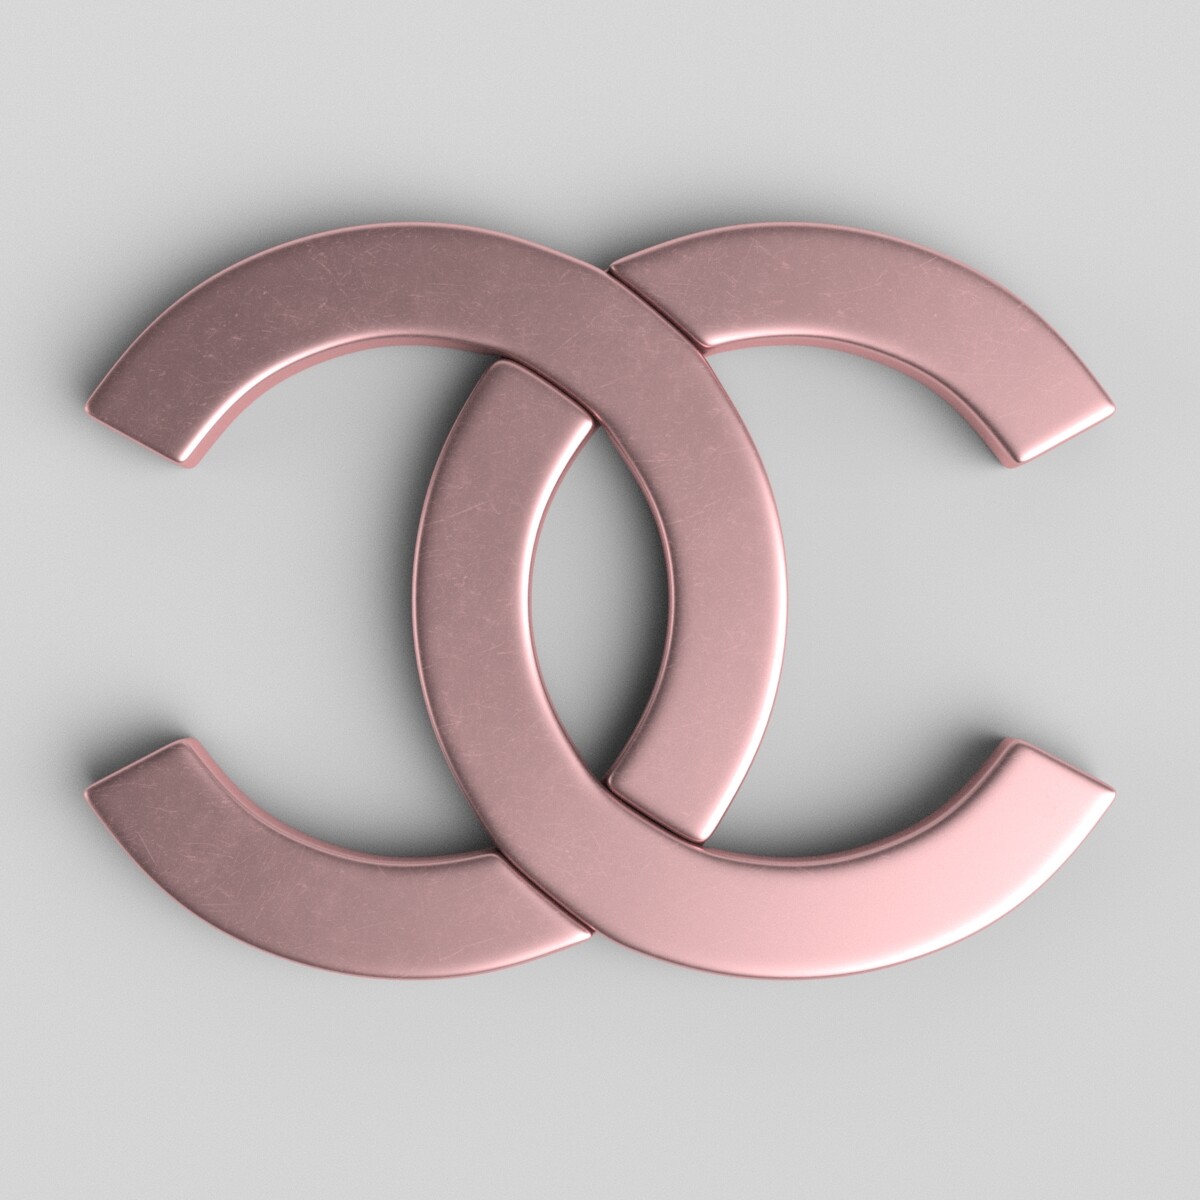 Chanel Logo v1 001 free VR  AR  lowpoly 3D model  CGTrader